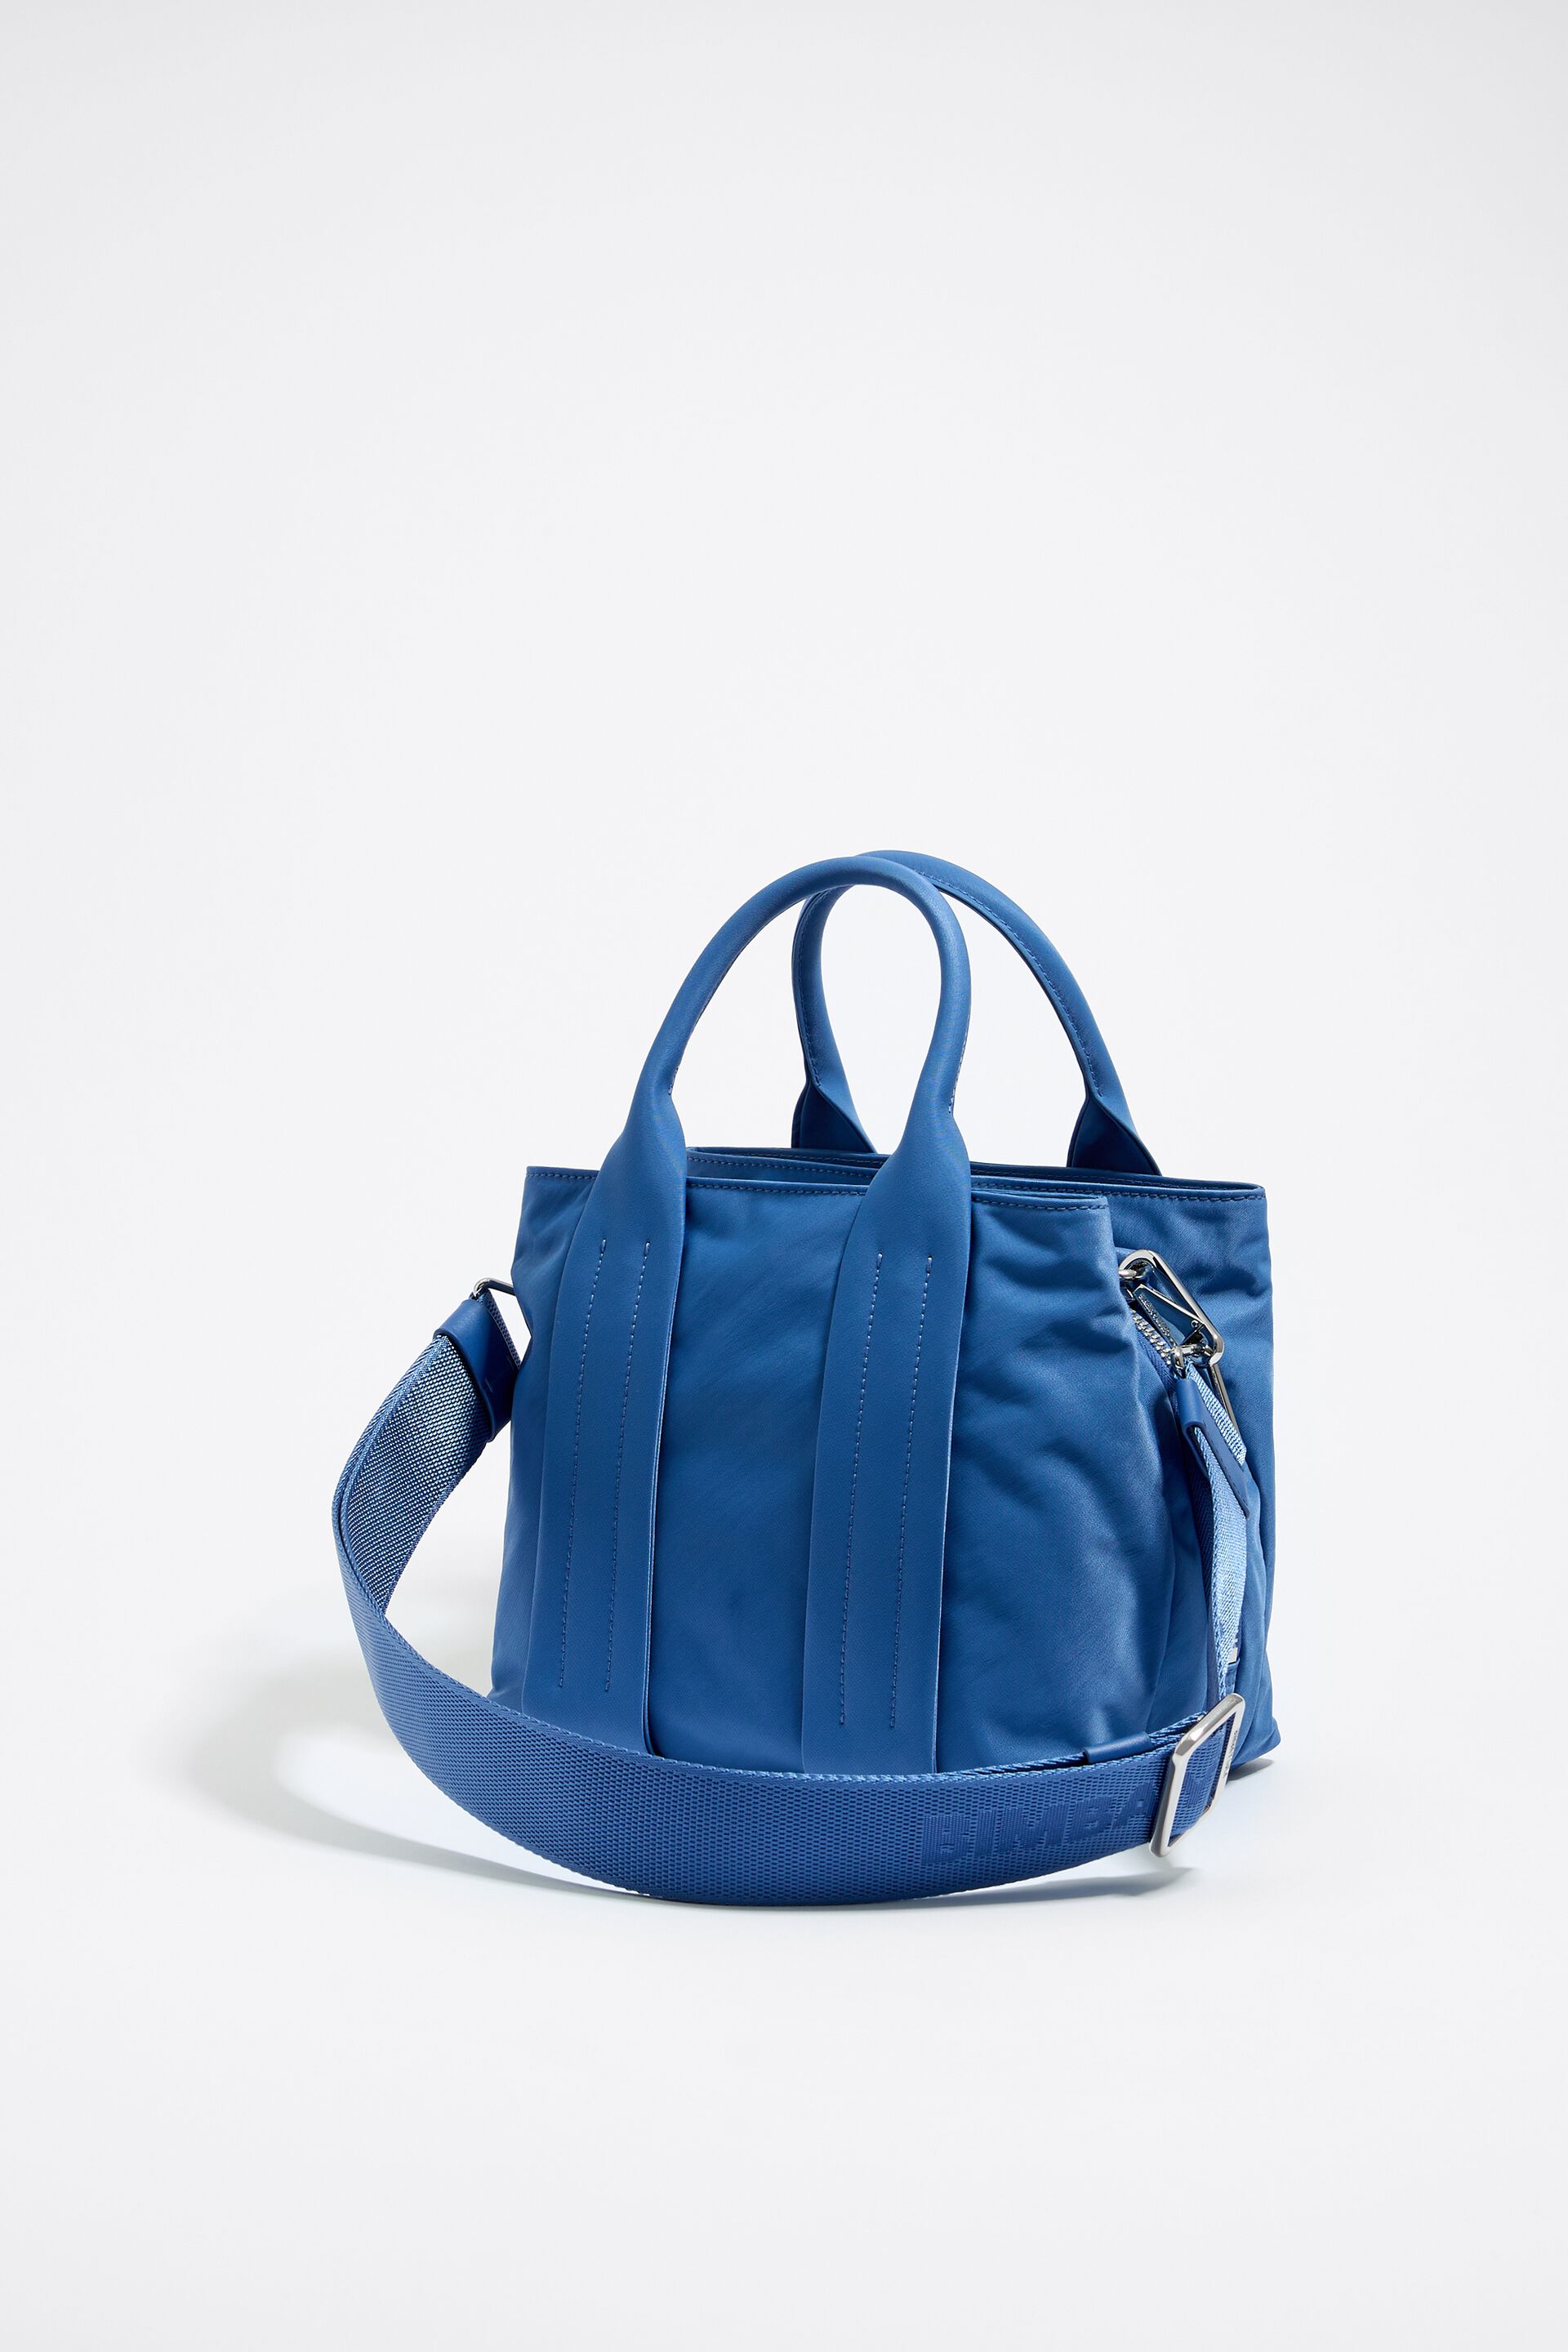 Leather crossbody bag Bimba y Lola Blue in Leather - 32554239